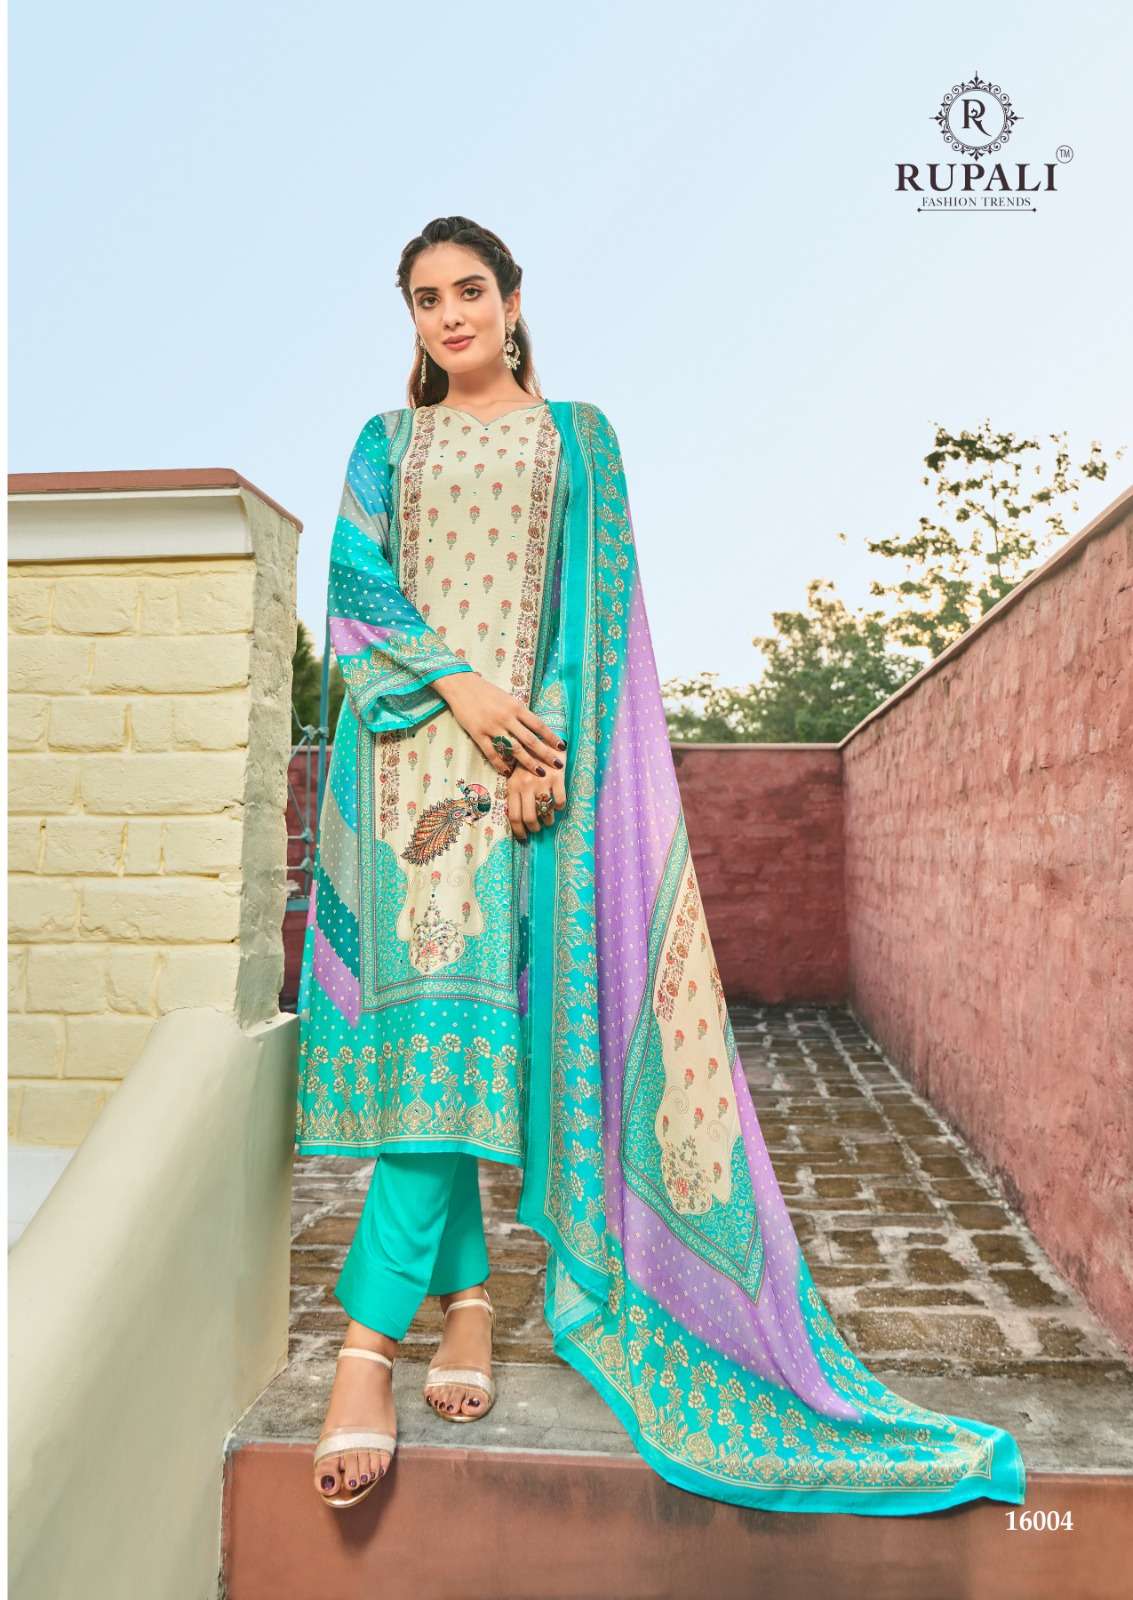 rupali fashion afsana 16001-16004 series latest designer salwar kameez wholesaler surat gujarat